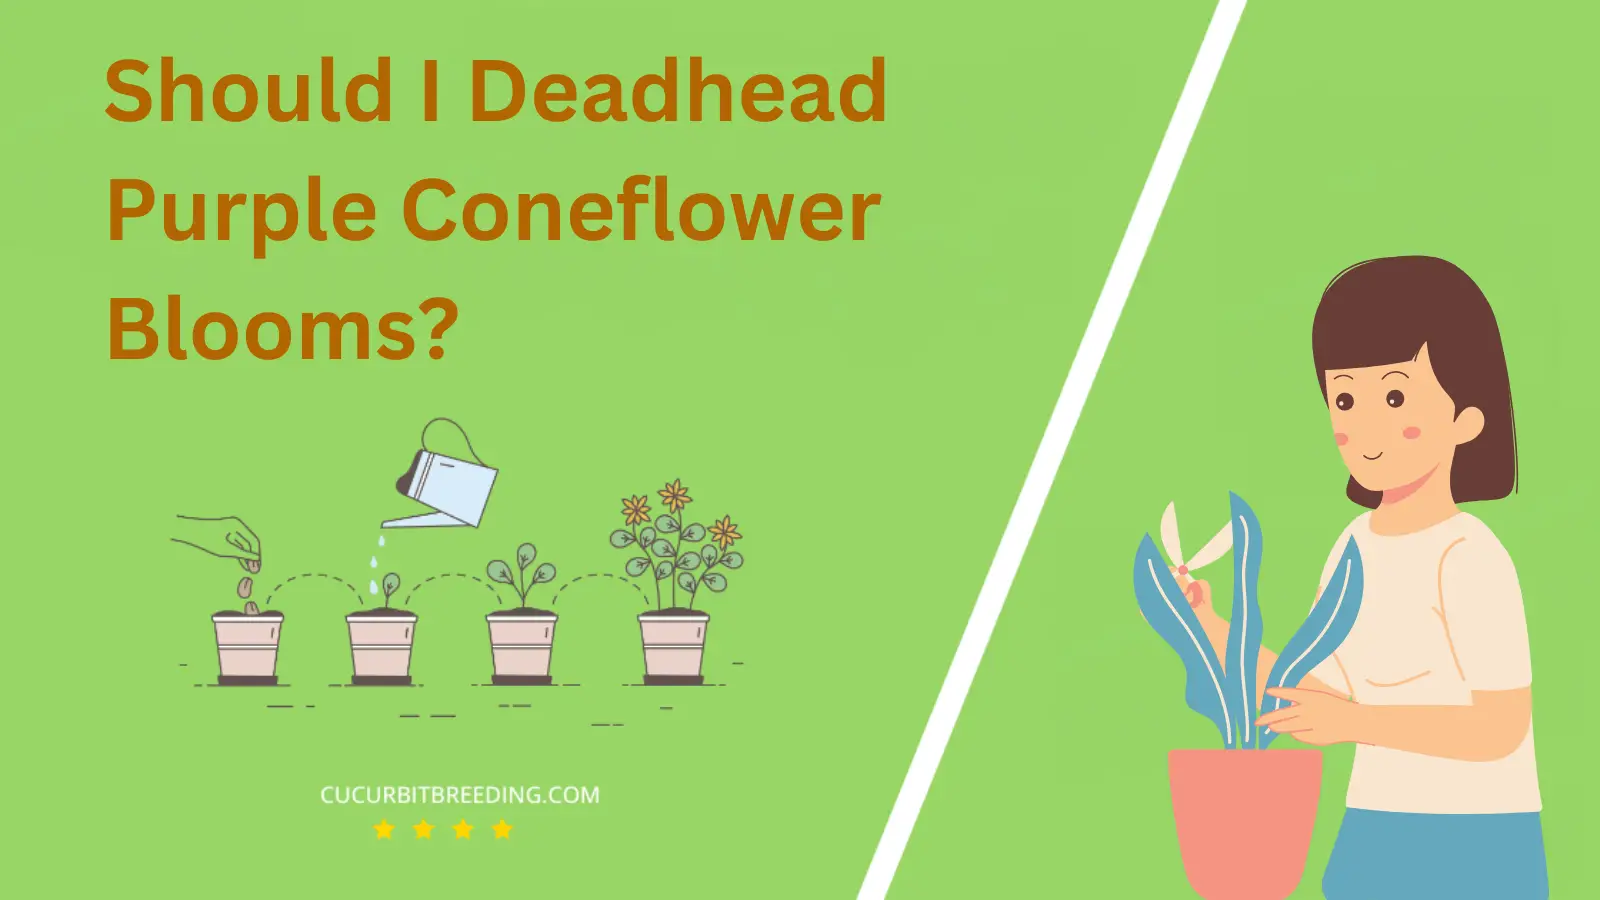 Should I Deadhead Purple Coneflower Blooms?